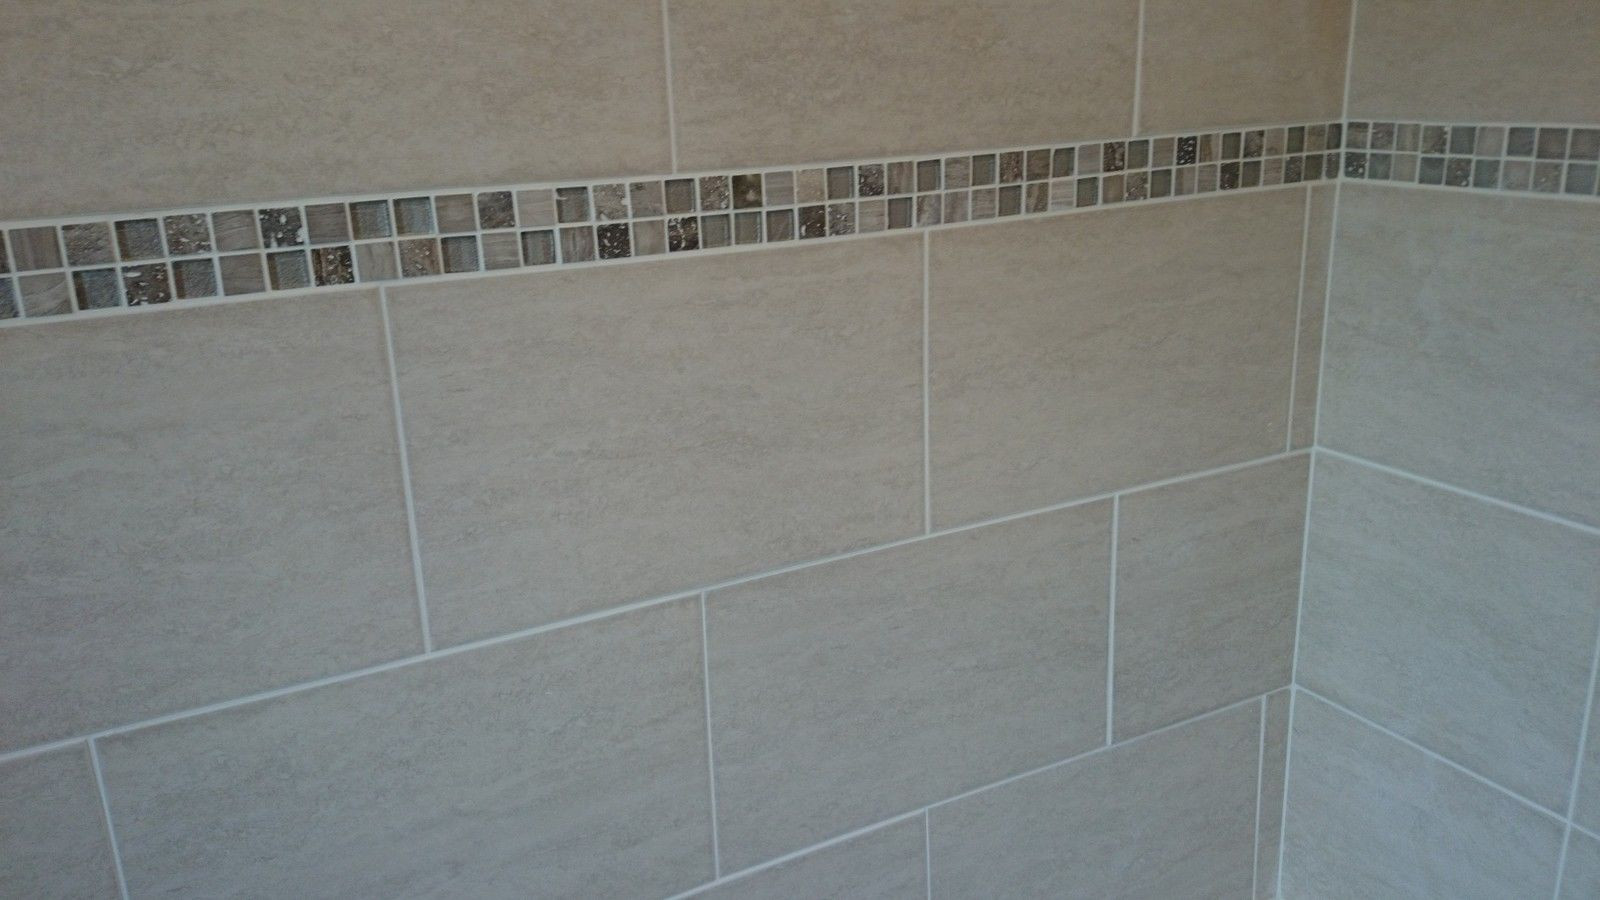 Tile Borders For Bathrooms
 Bathroom Tiles Borders Ideas With Innovative Style In